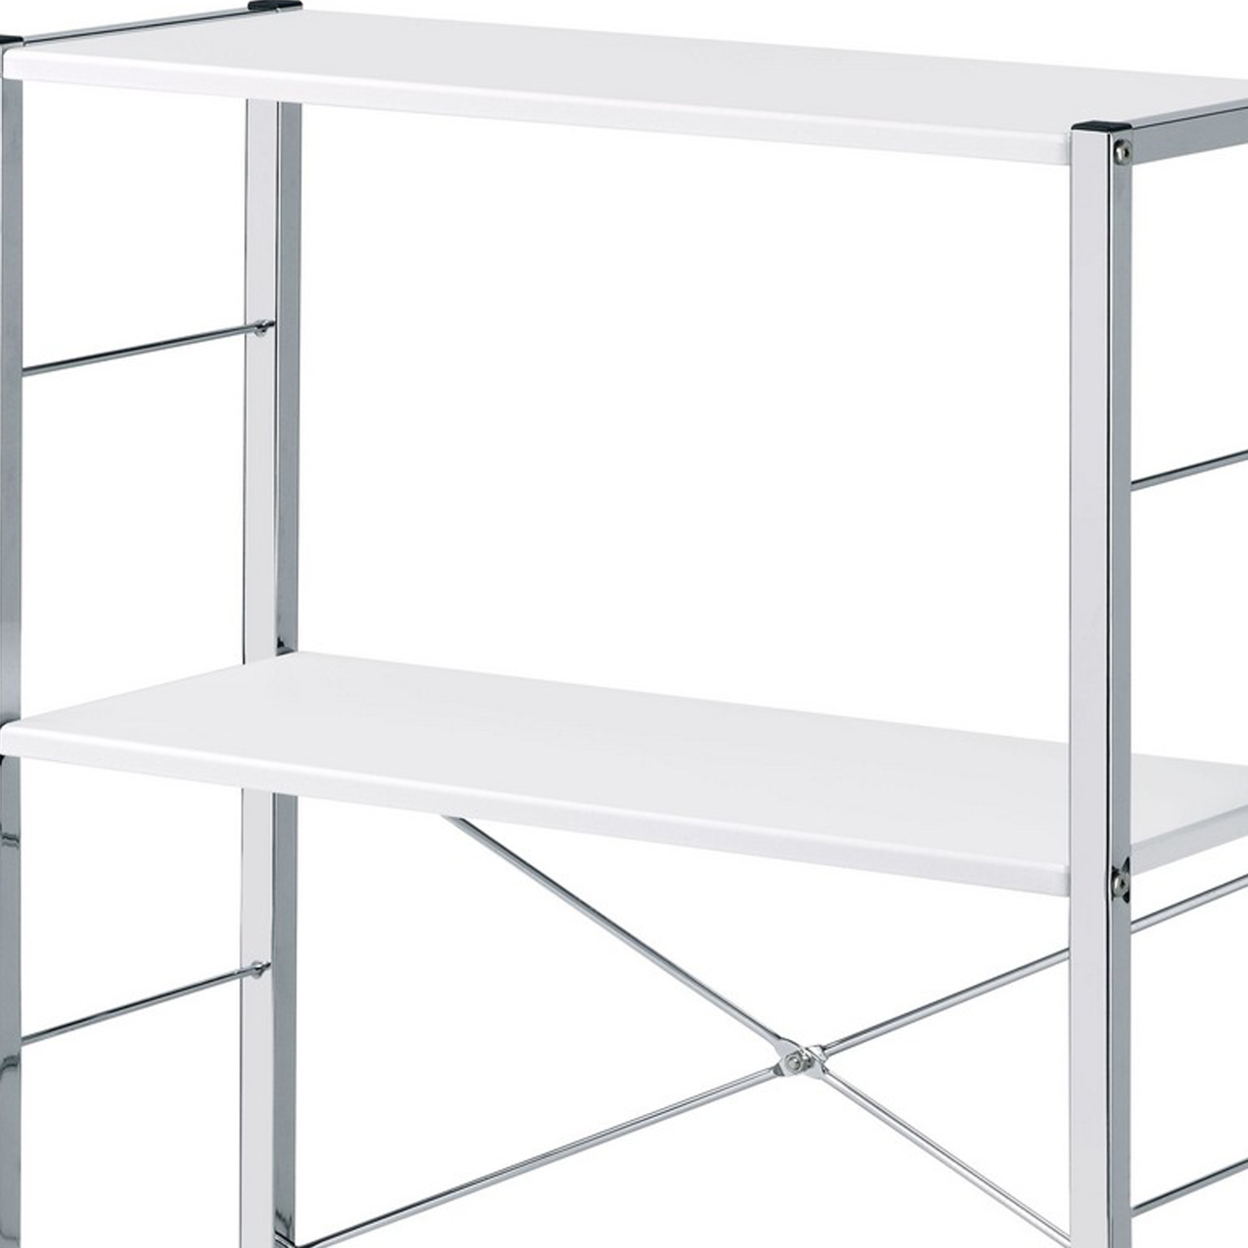 Bookshelf With X Shaped Cross Bar Chrome Finish, White- Saltoro Sherpi